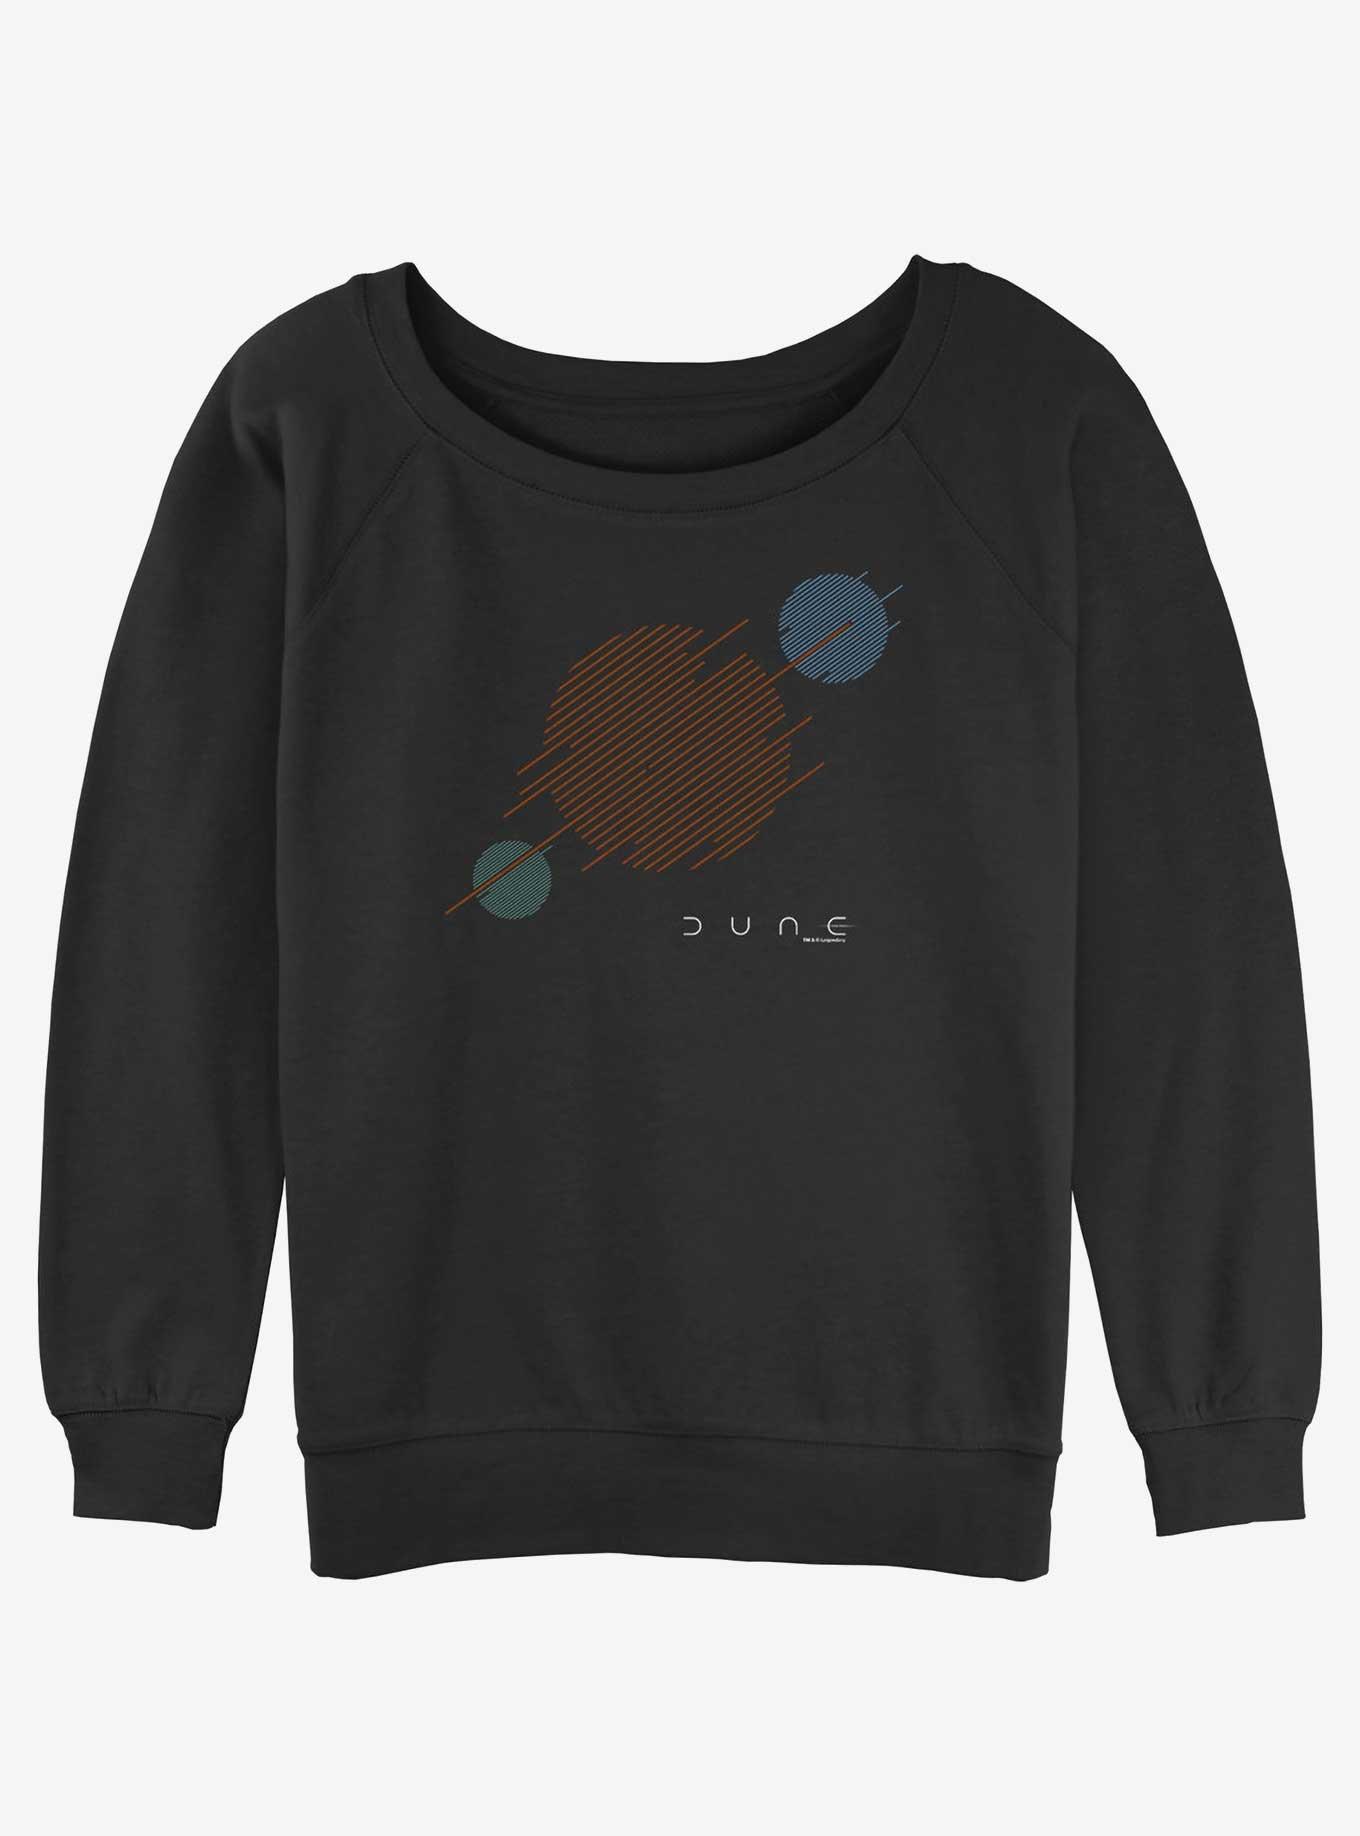 Dune Universe Icons Womens Slouchy Sweatshirt, BLACK, hi-res